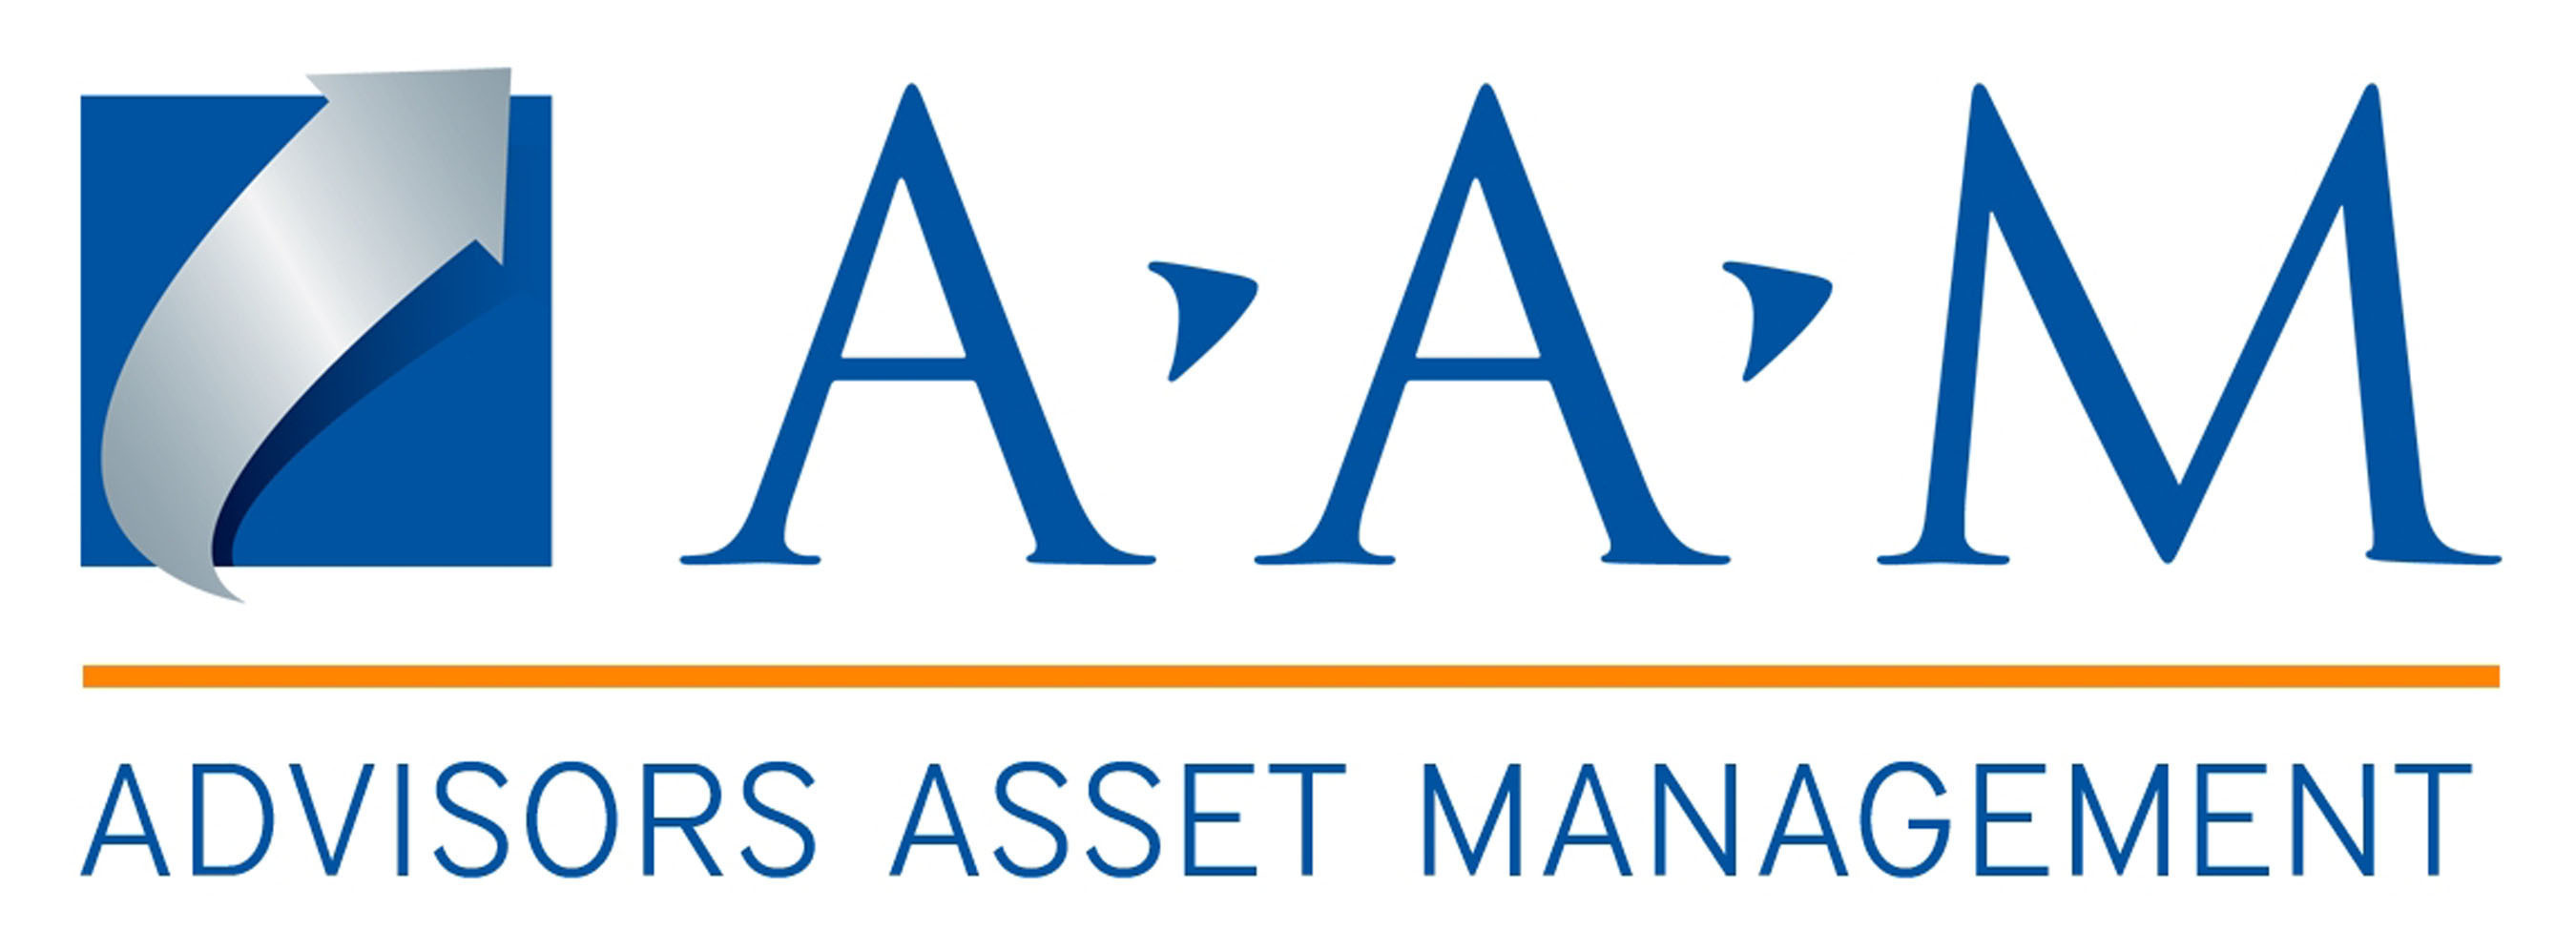 Display Image of Advisors Asset Management